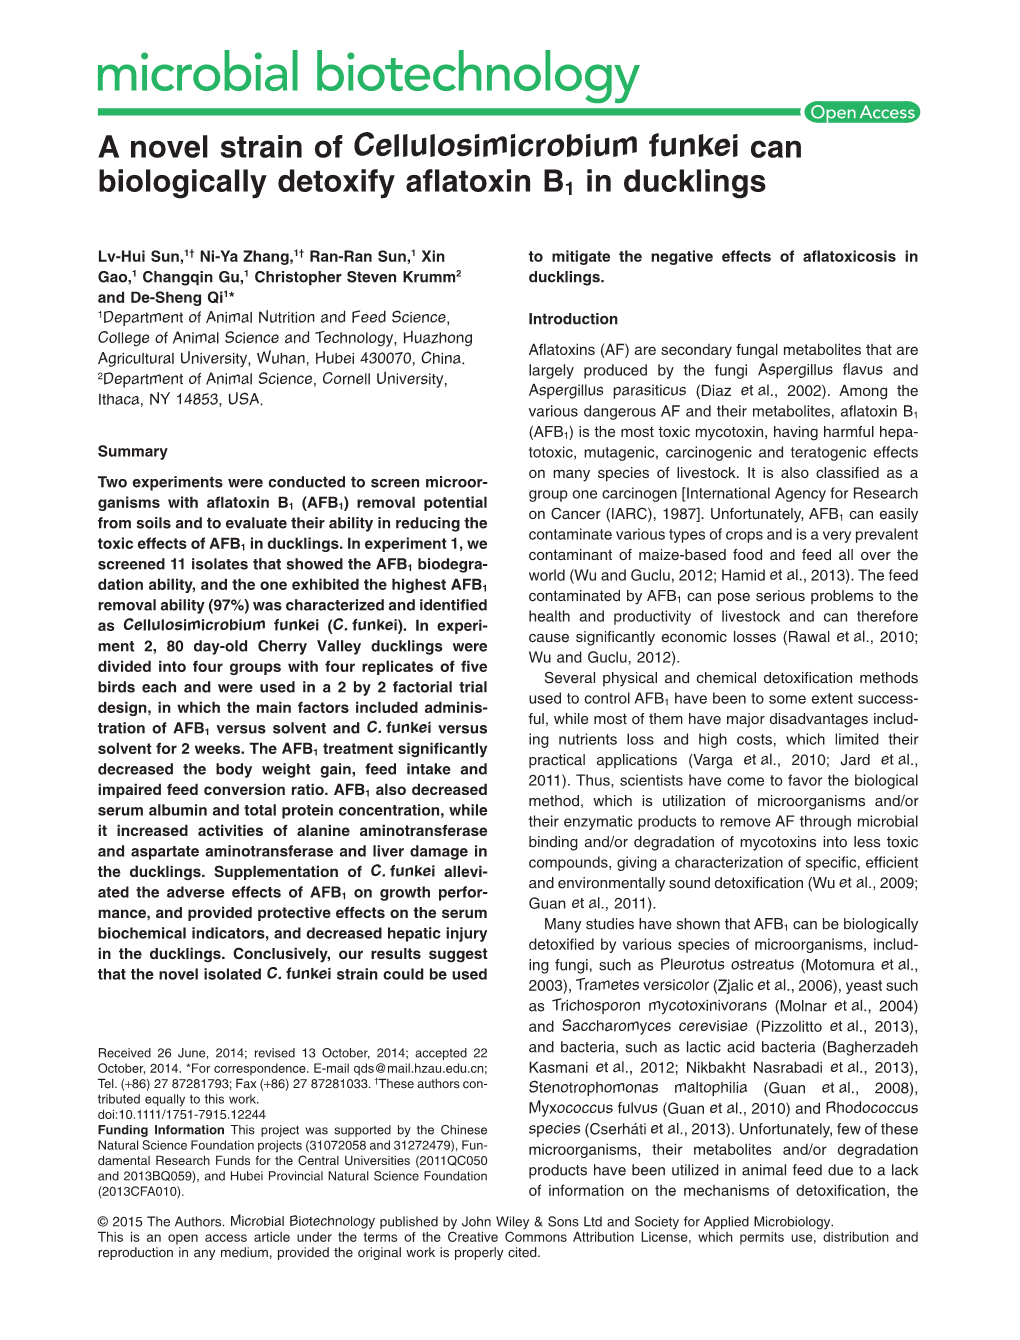 A Novel Strain of Cellulosimicrobium Funkei Can Biologically Detoxify Aflatoxin B1 in Ducklings